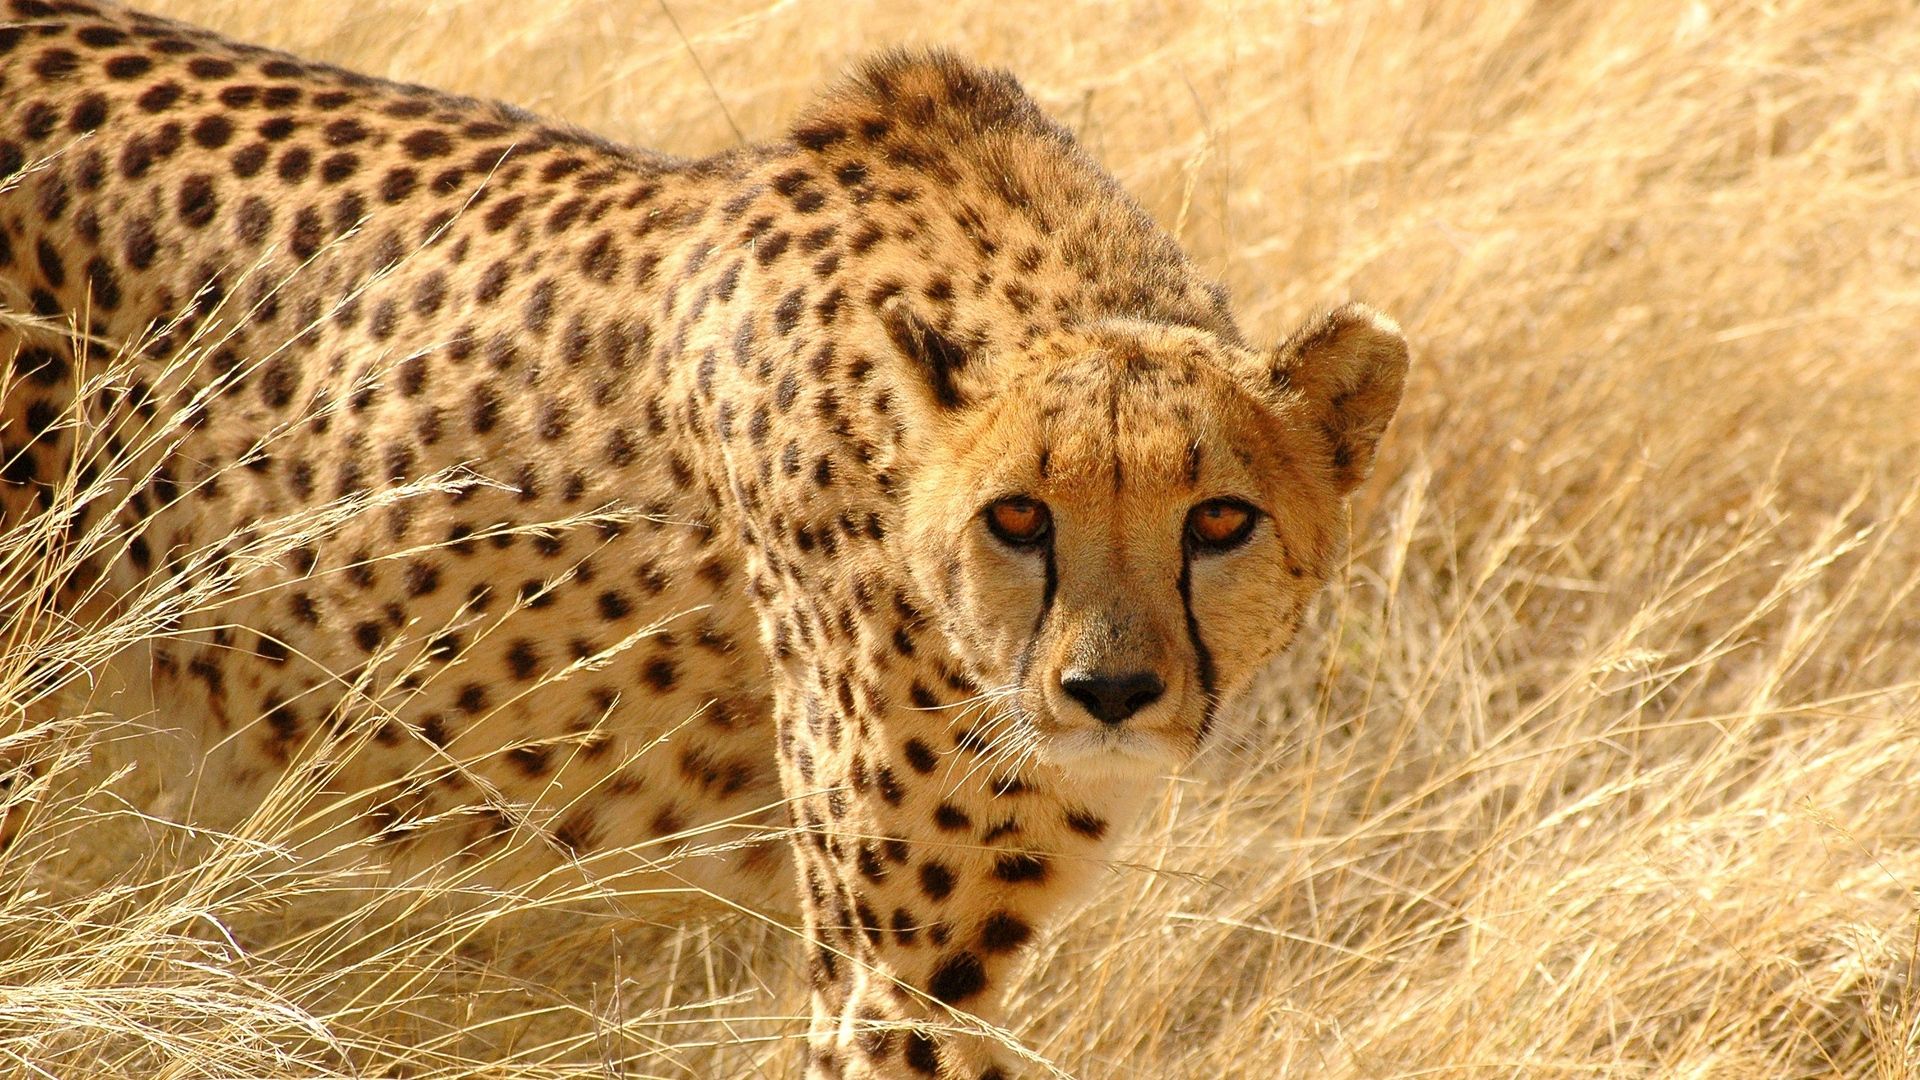 Cheetah In Africa